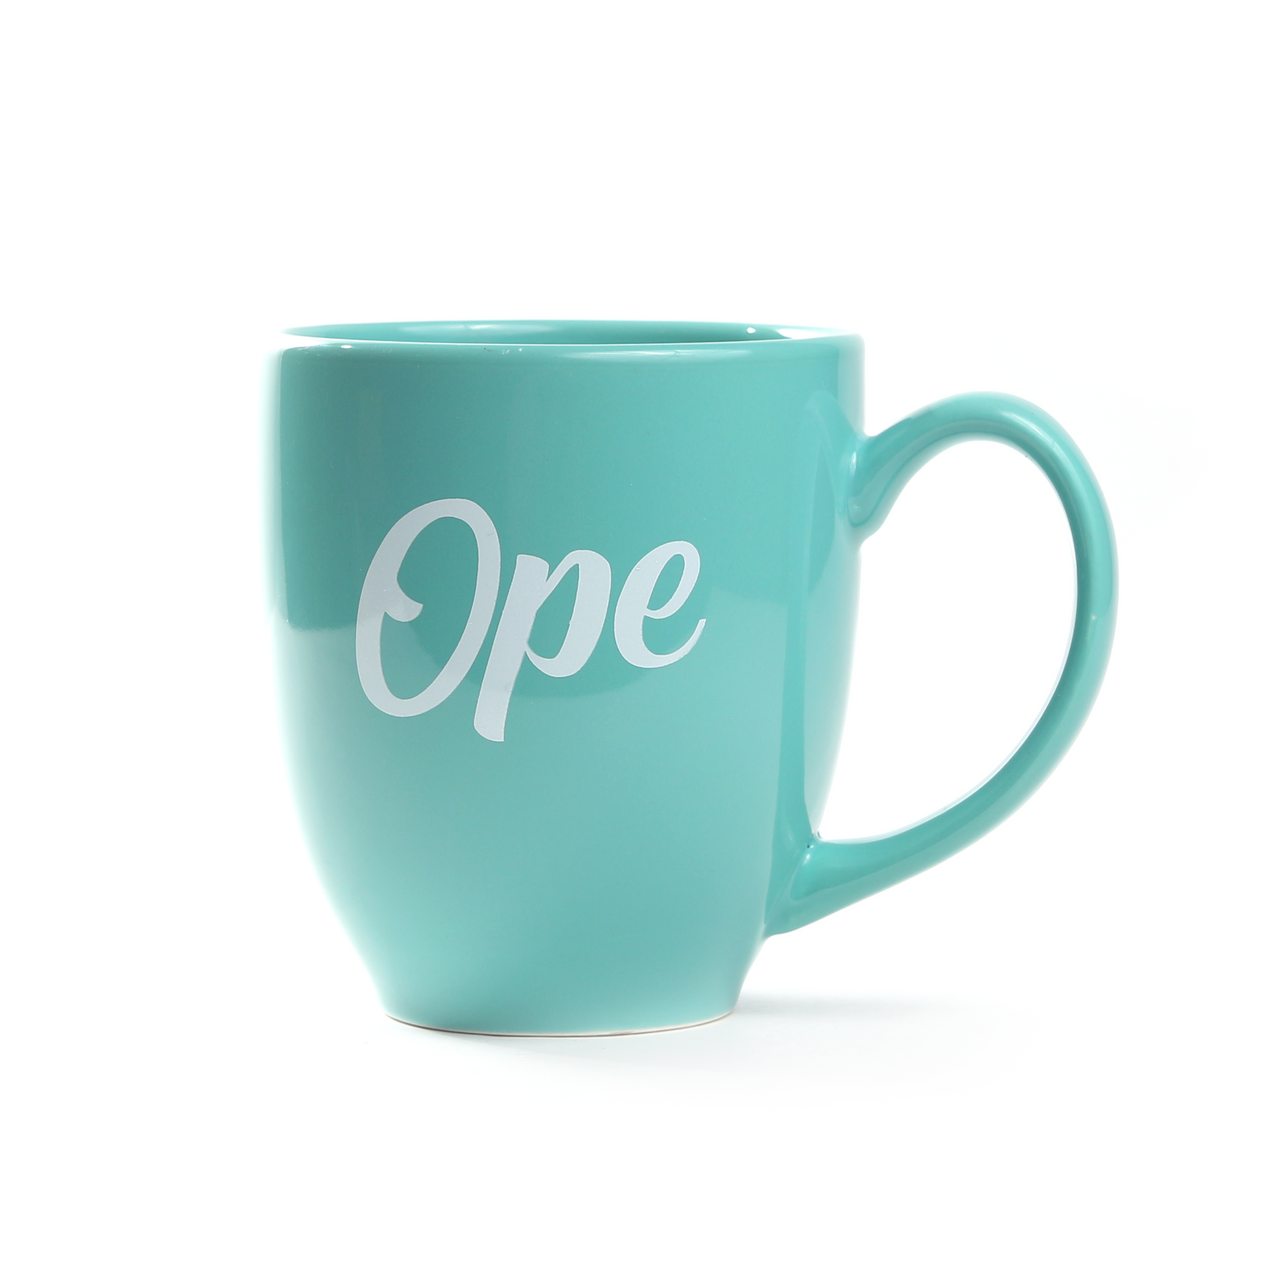 Ope Coffee Mug